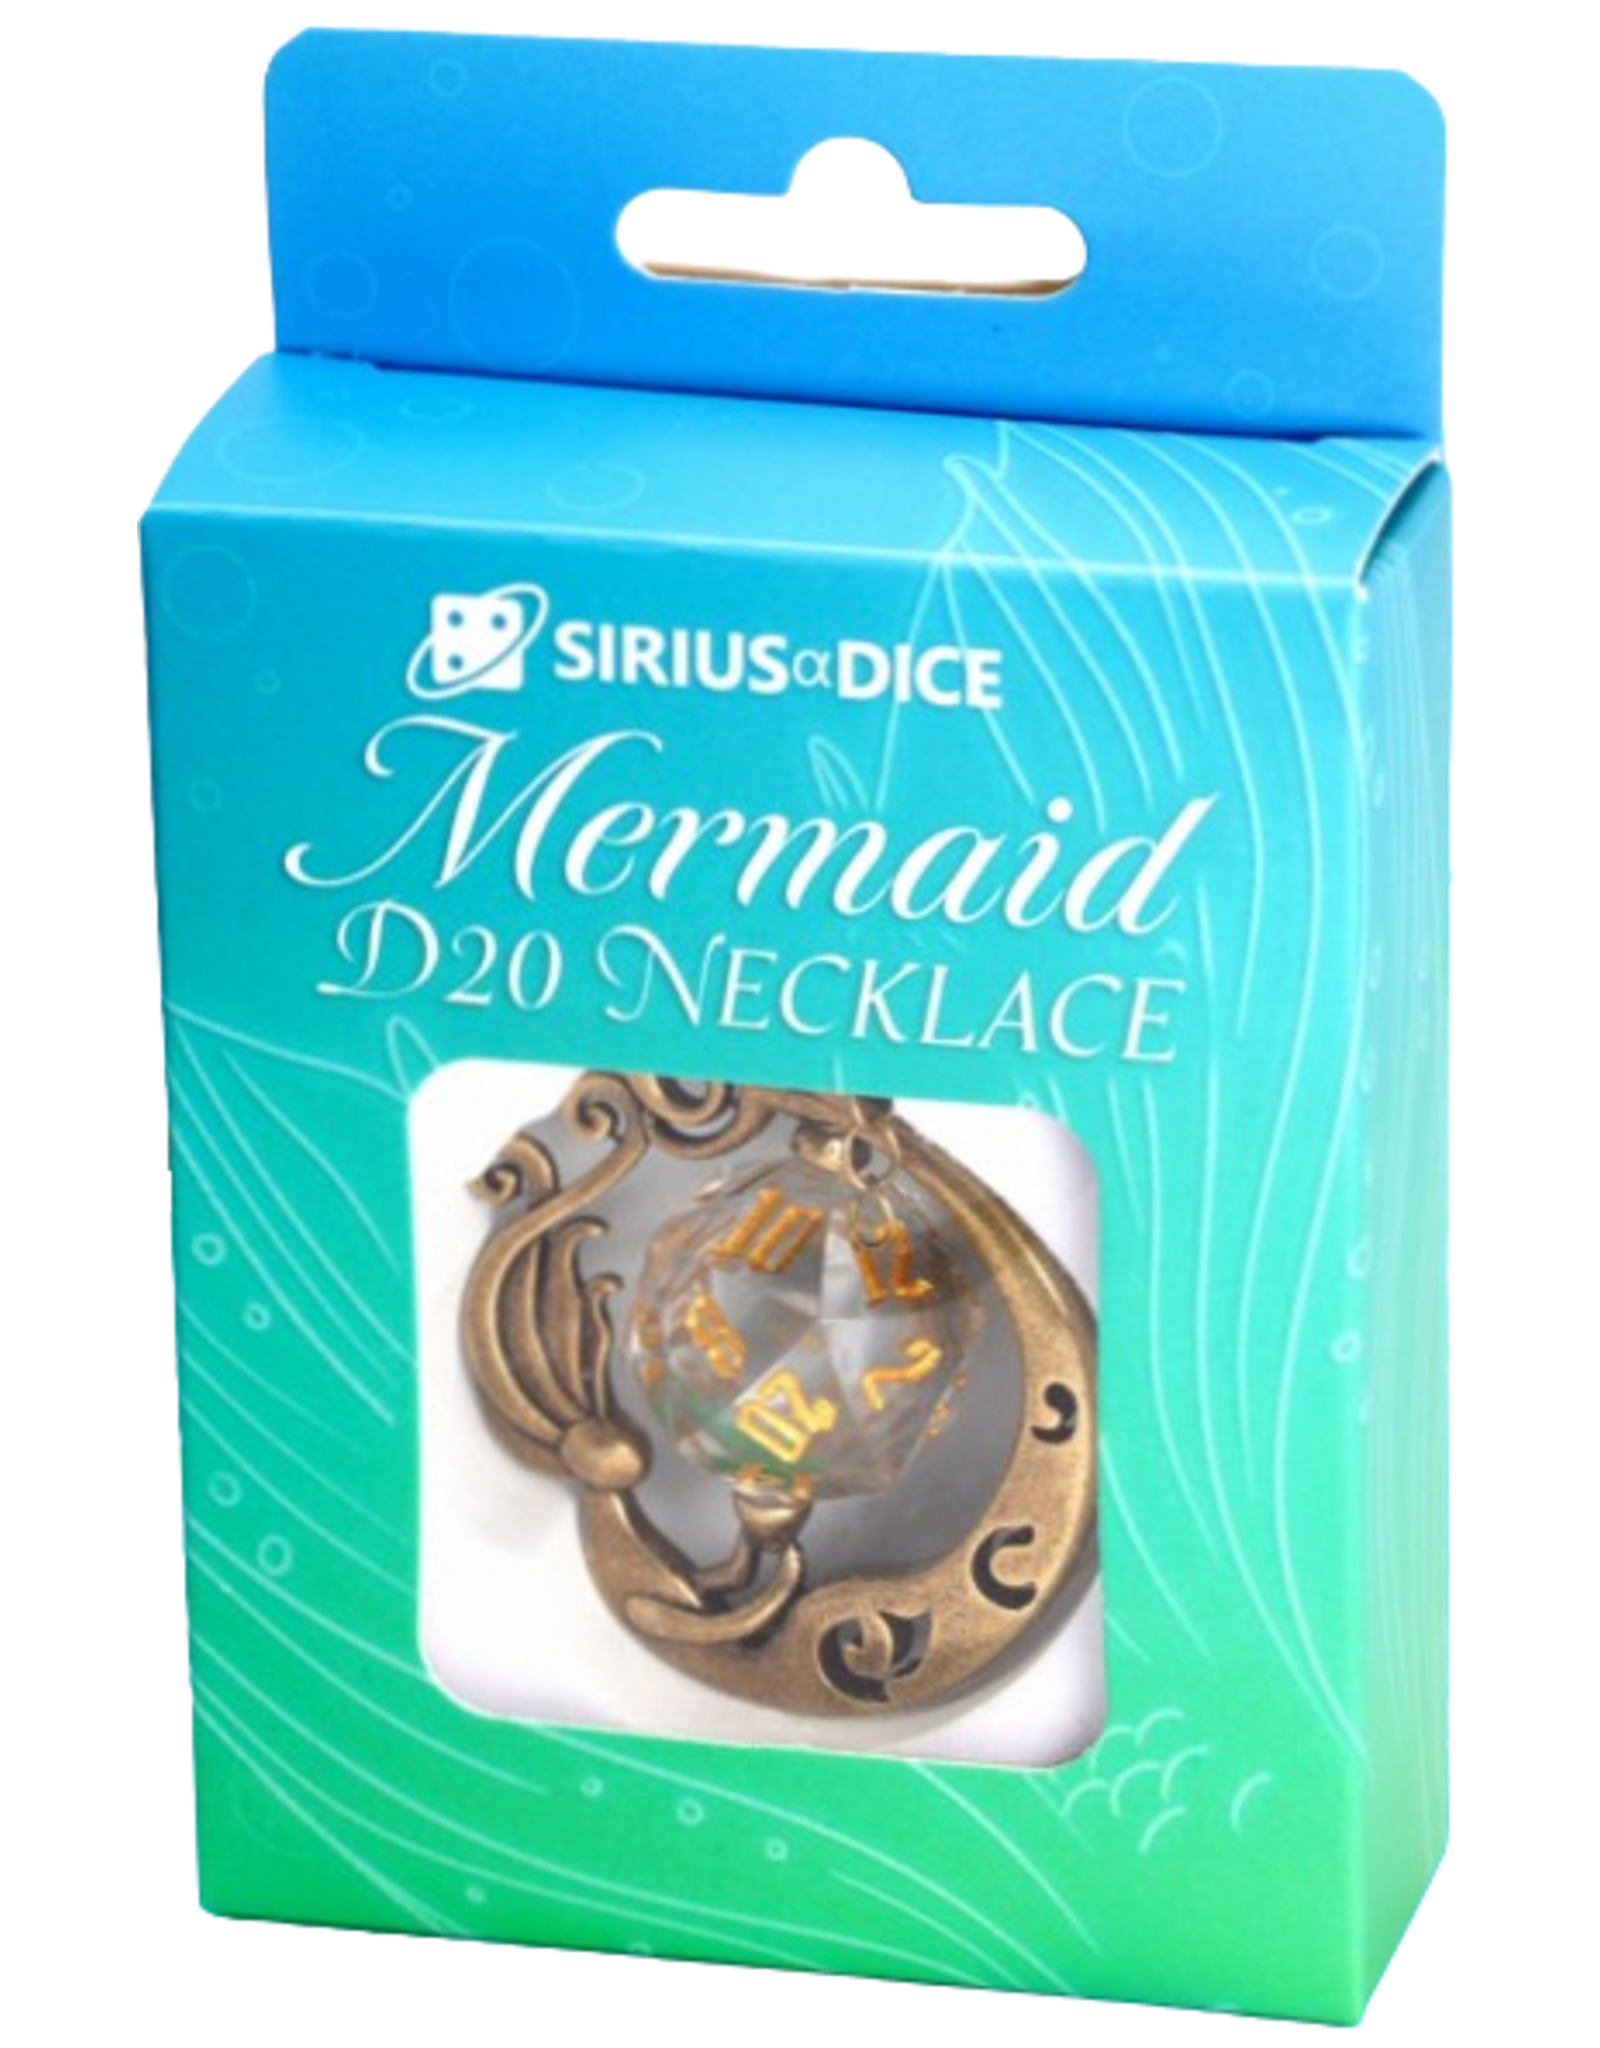 Sirius Dice Sirius Dice Mermaid D20 Necklace